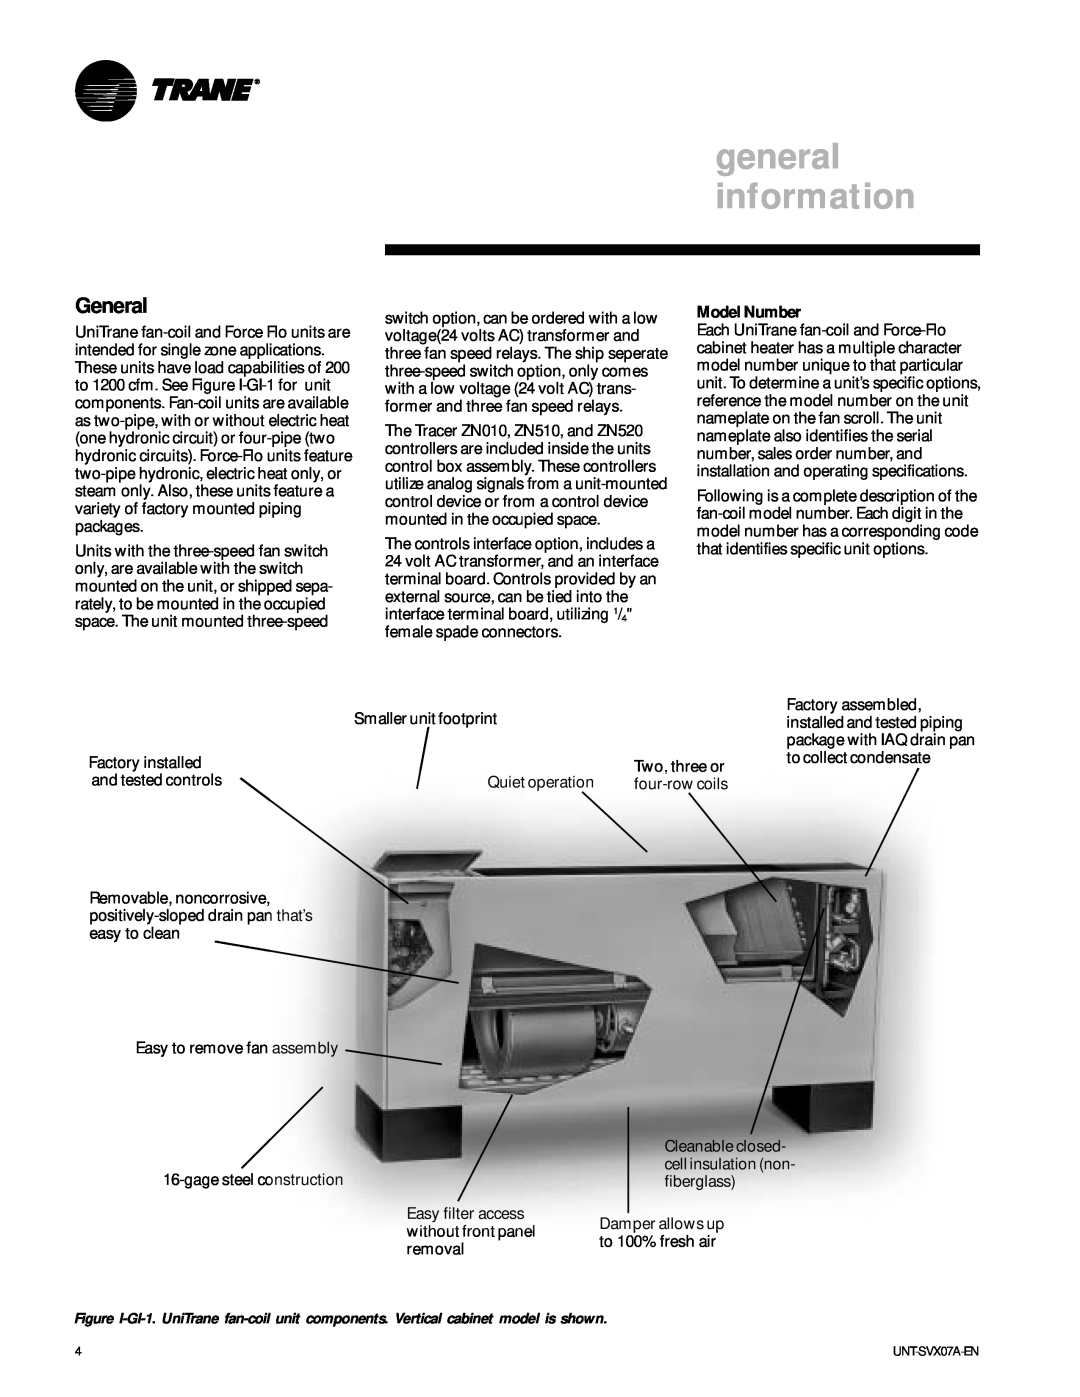 Trane UNT-SVX07A-EN, UniTrane Fan-Coil & Force Flo Air Conditioners manual General, general information, Model Number 